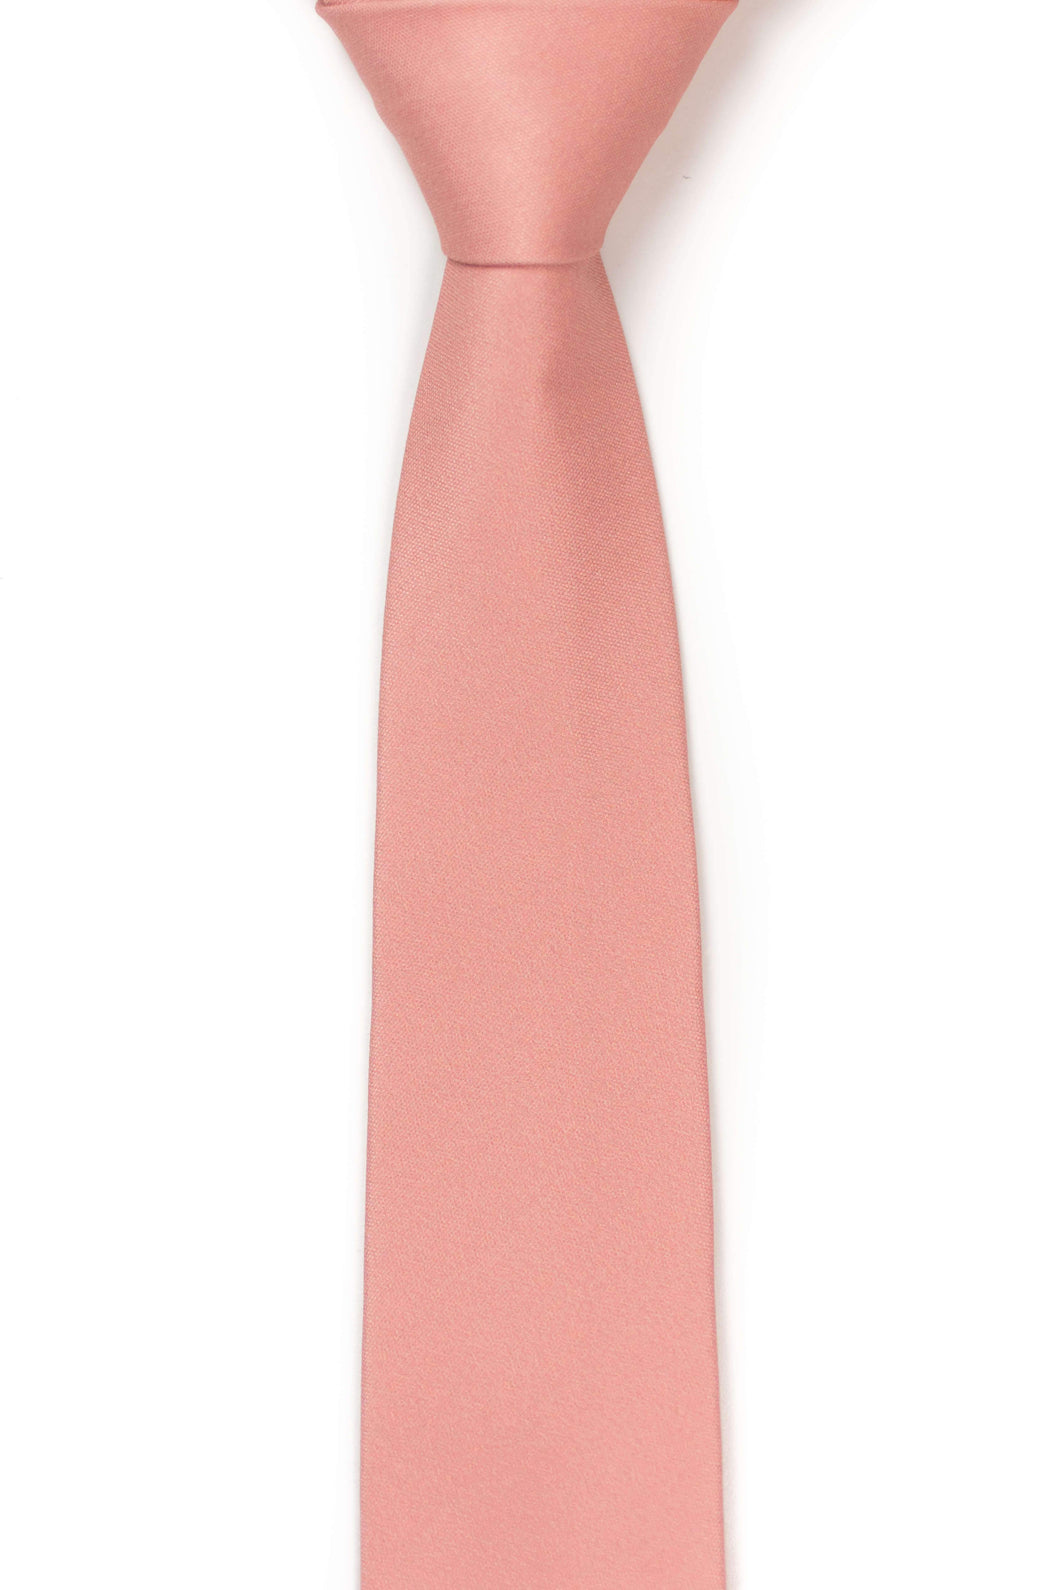 Peachtree missionary tie